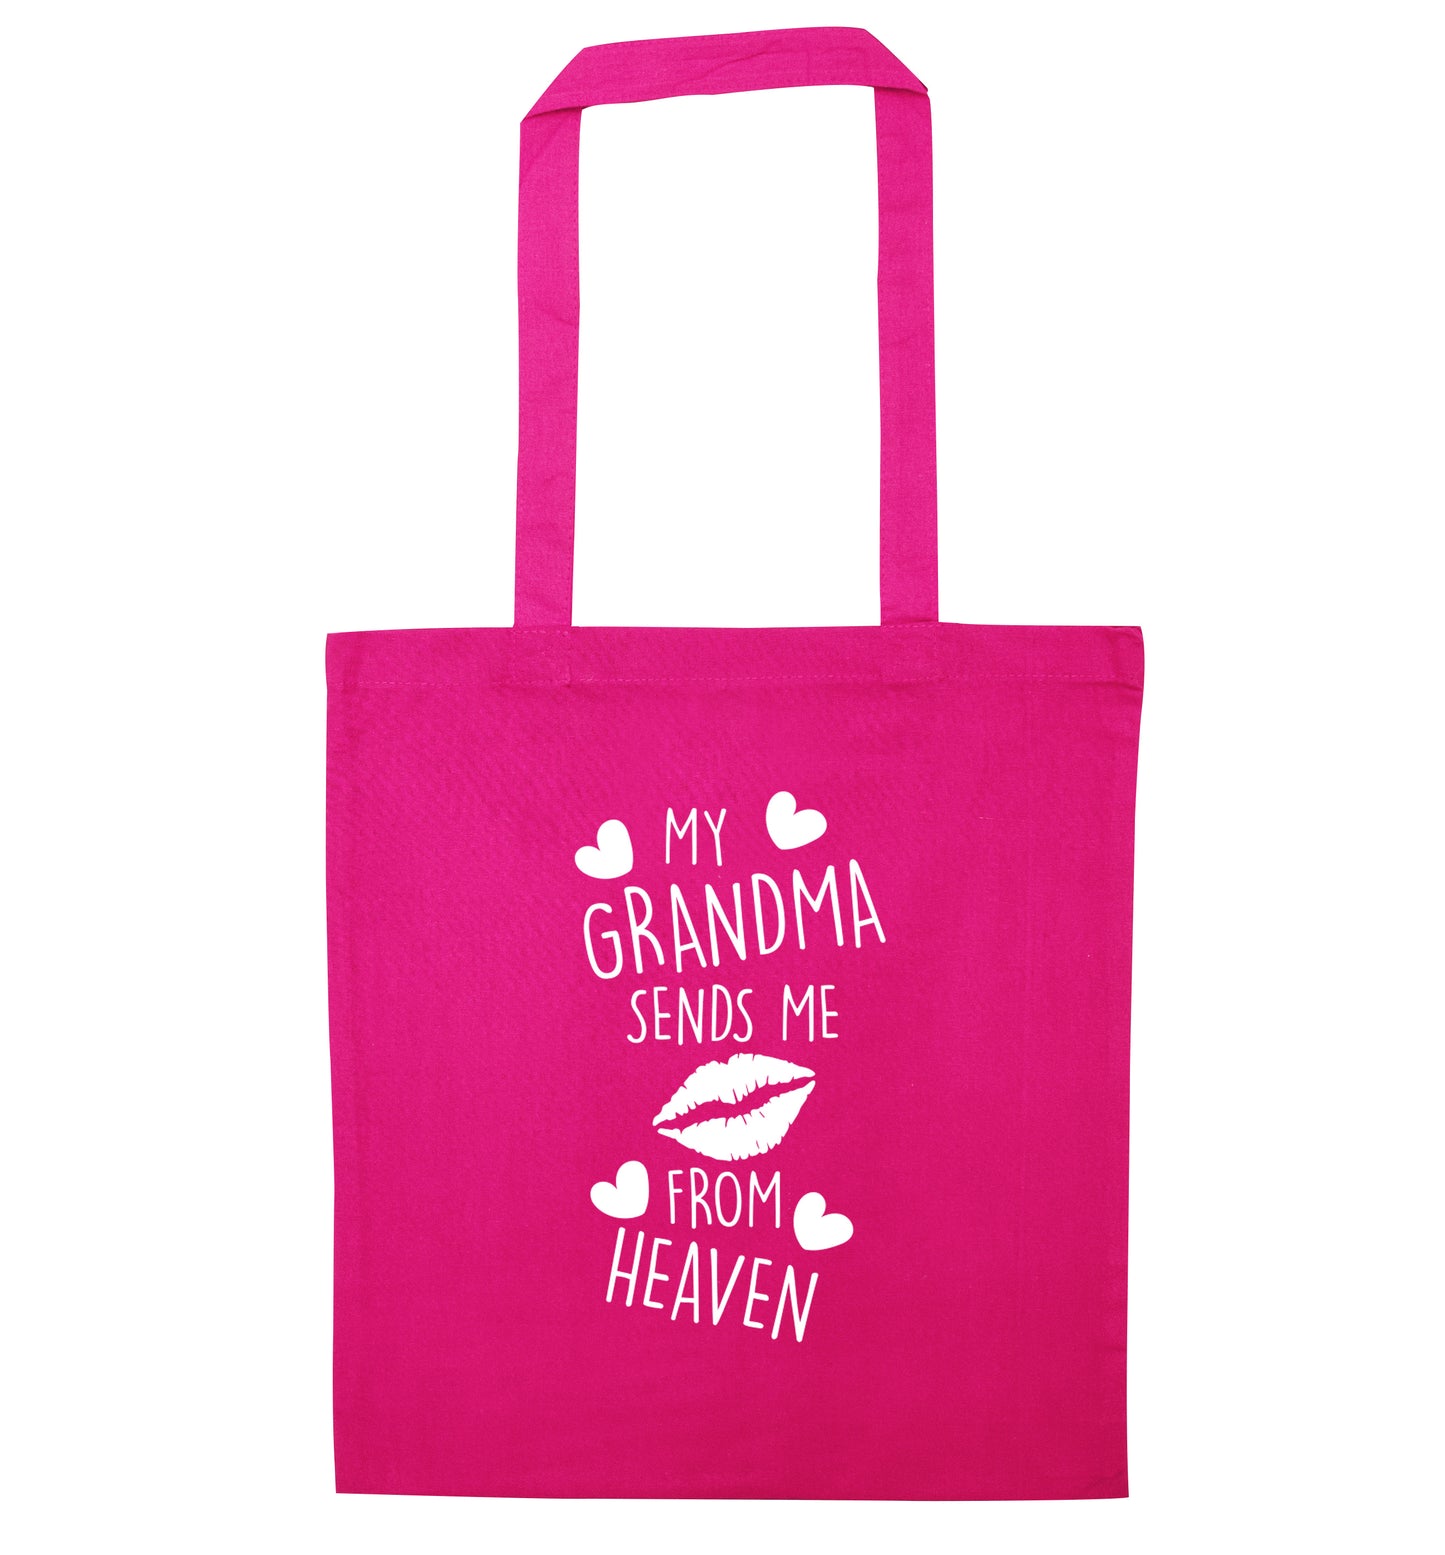 My grandma sends me kisses from heaven pink tote bag